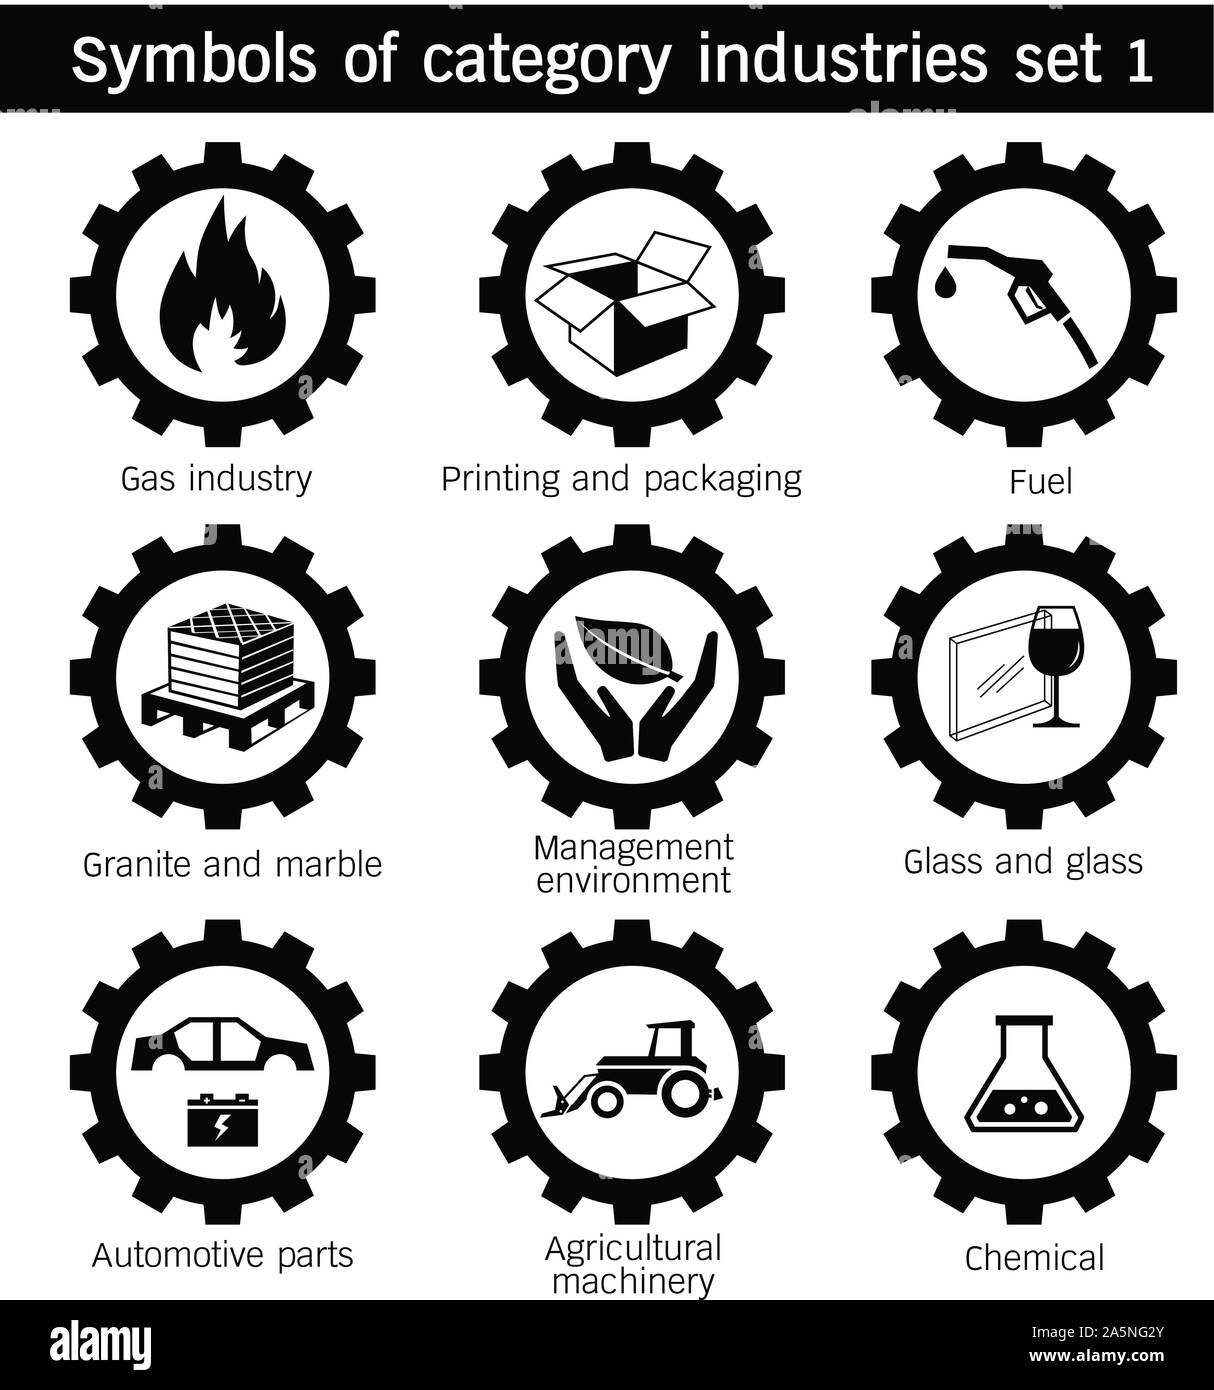 Category Icons & Symbols